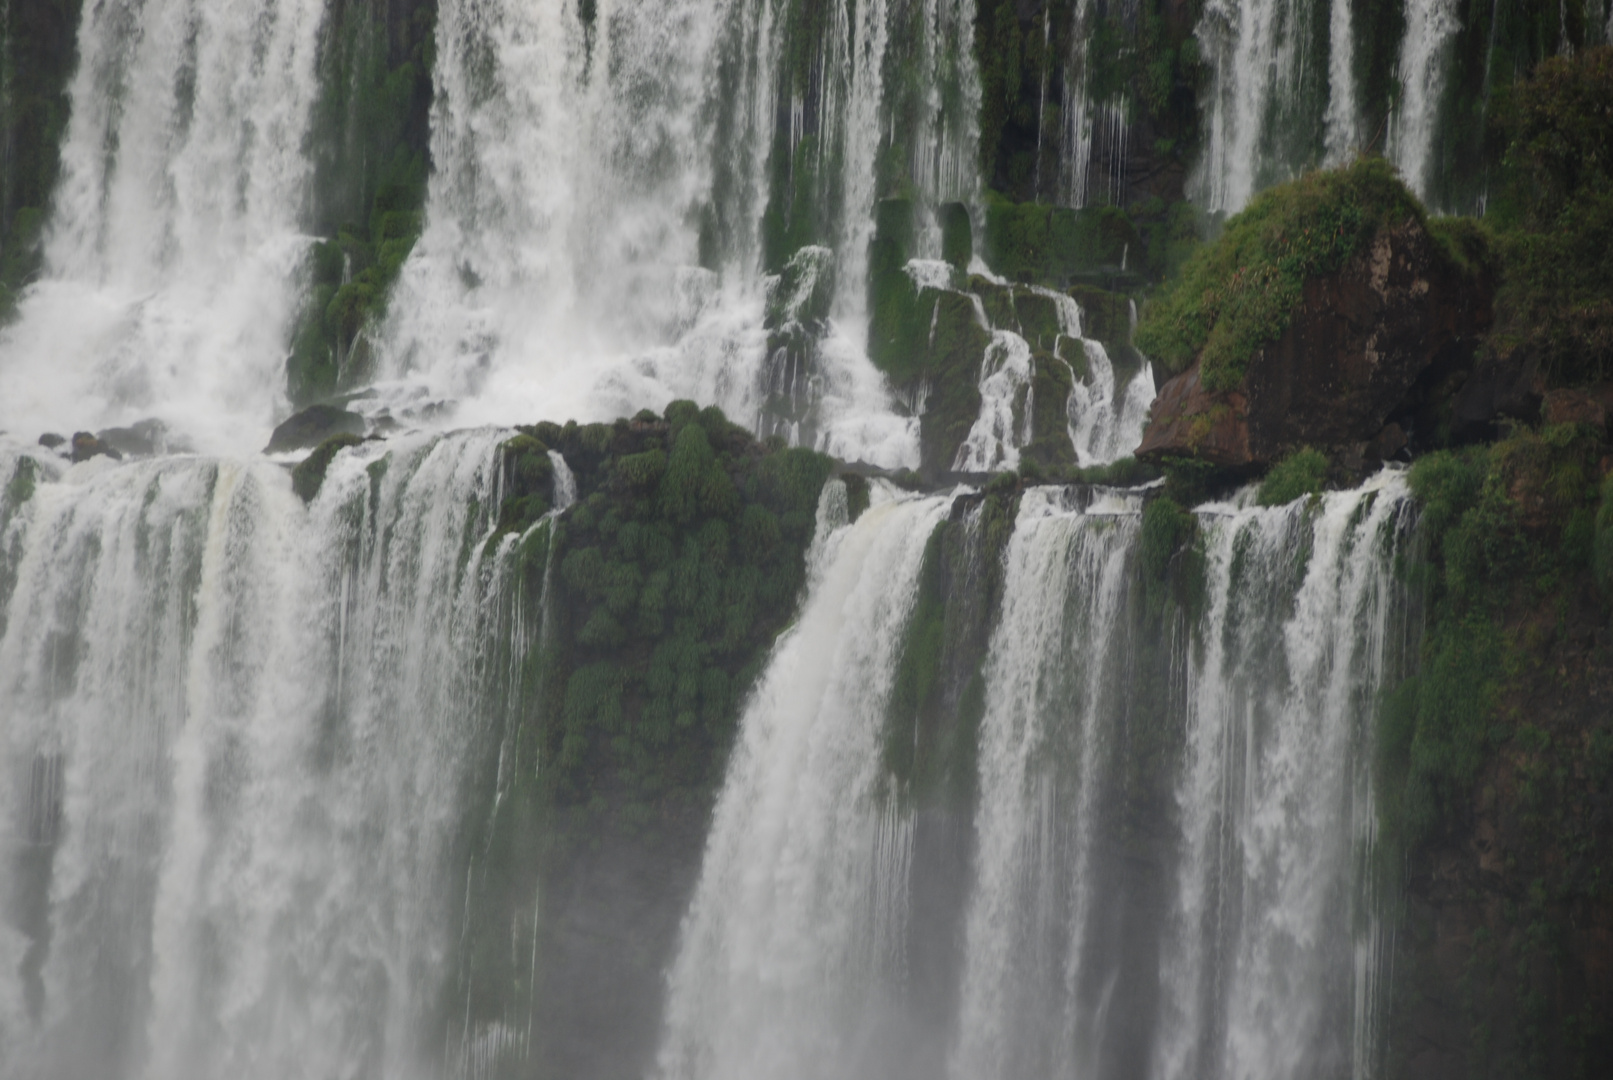 Waterfall at Igausou Falls - Paraguay / Argentina border